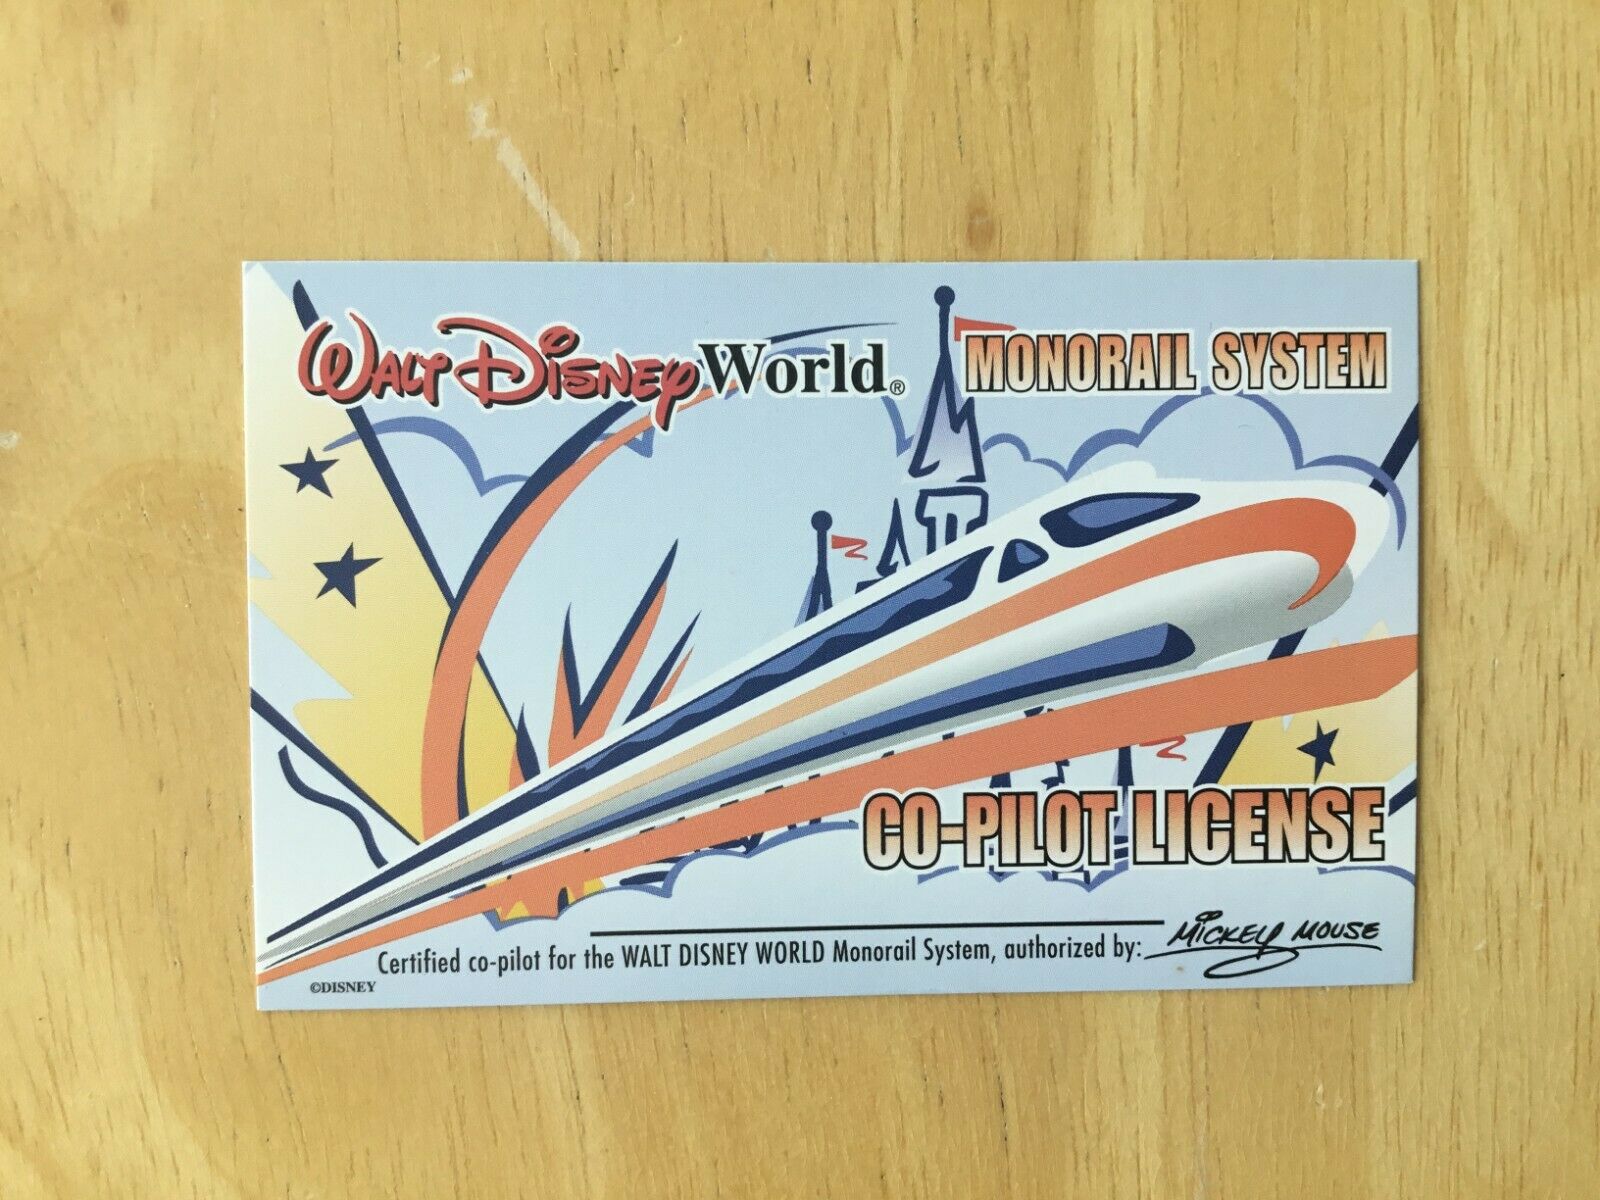 Monorail Co-Pilot License, Walt Disney World, Disney, Mickey Mouse, Monorail